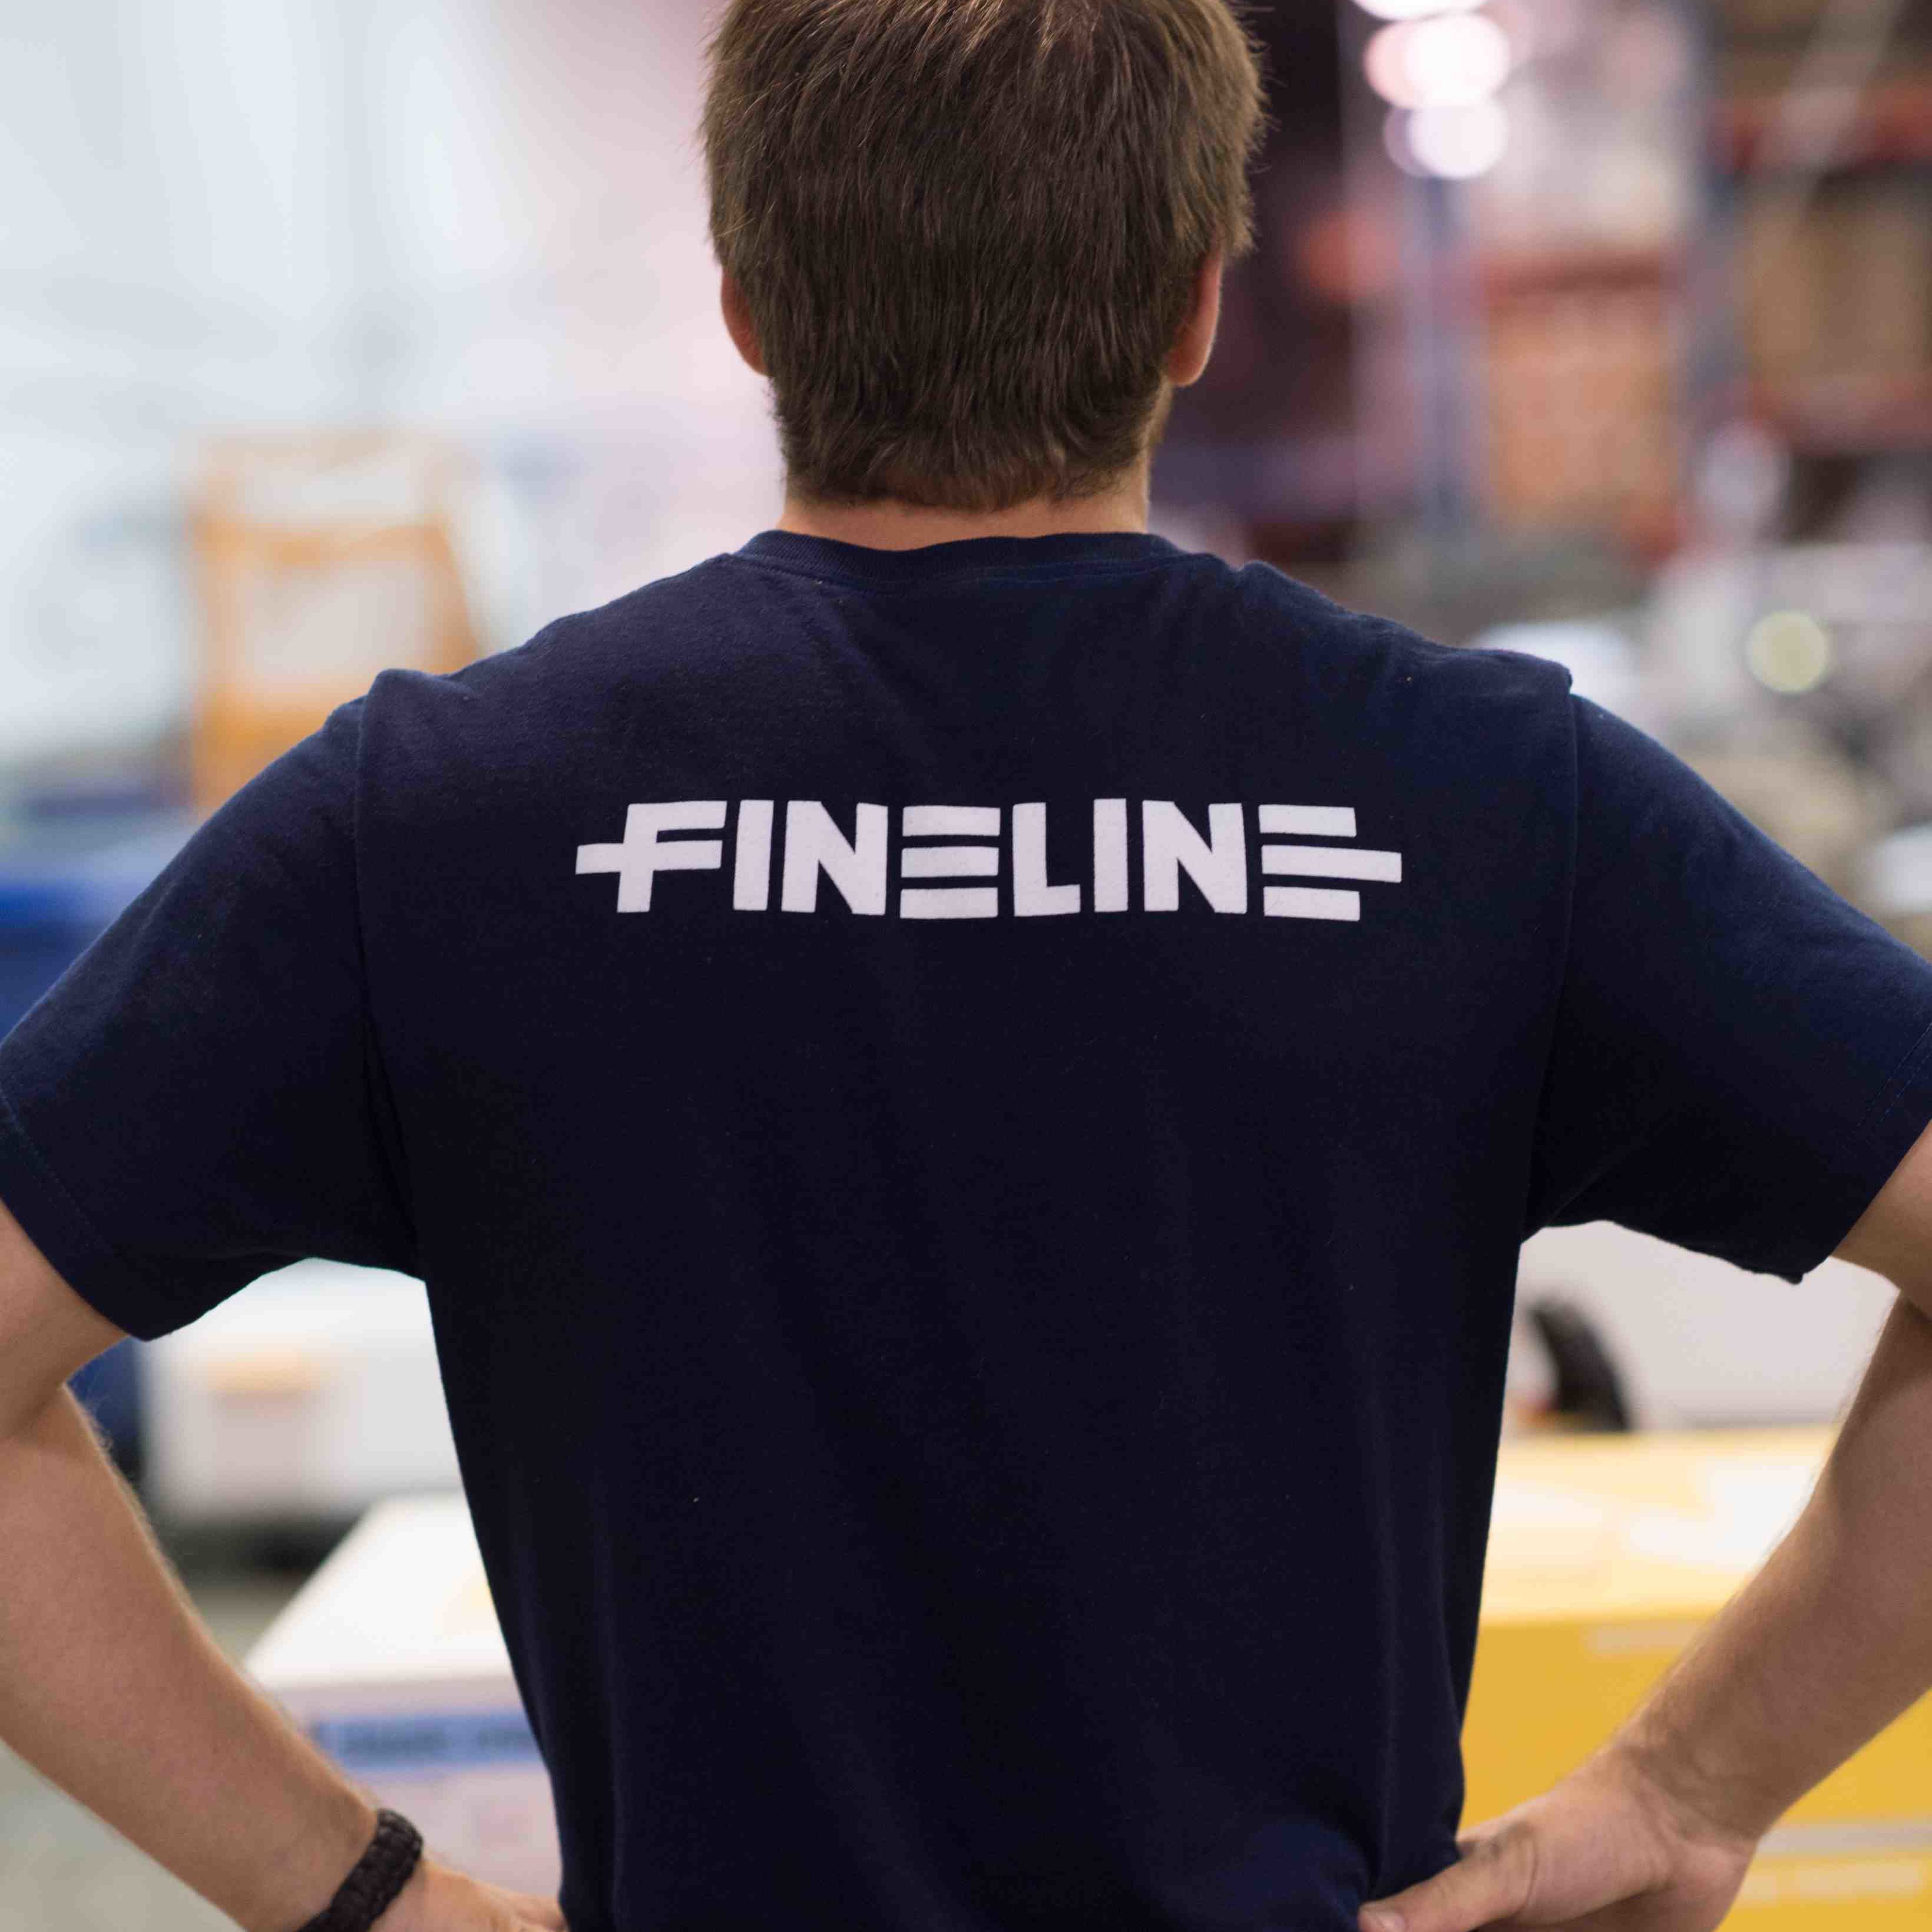 Fineline t-shirt